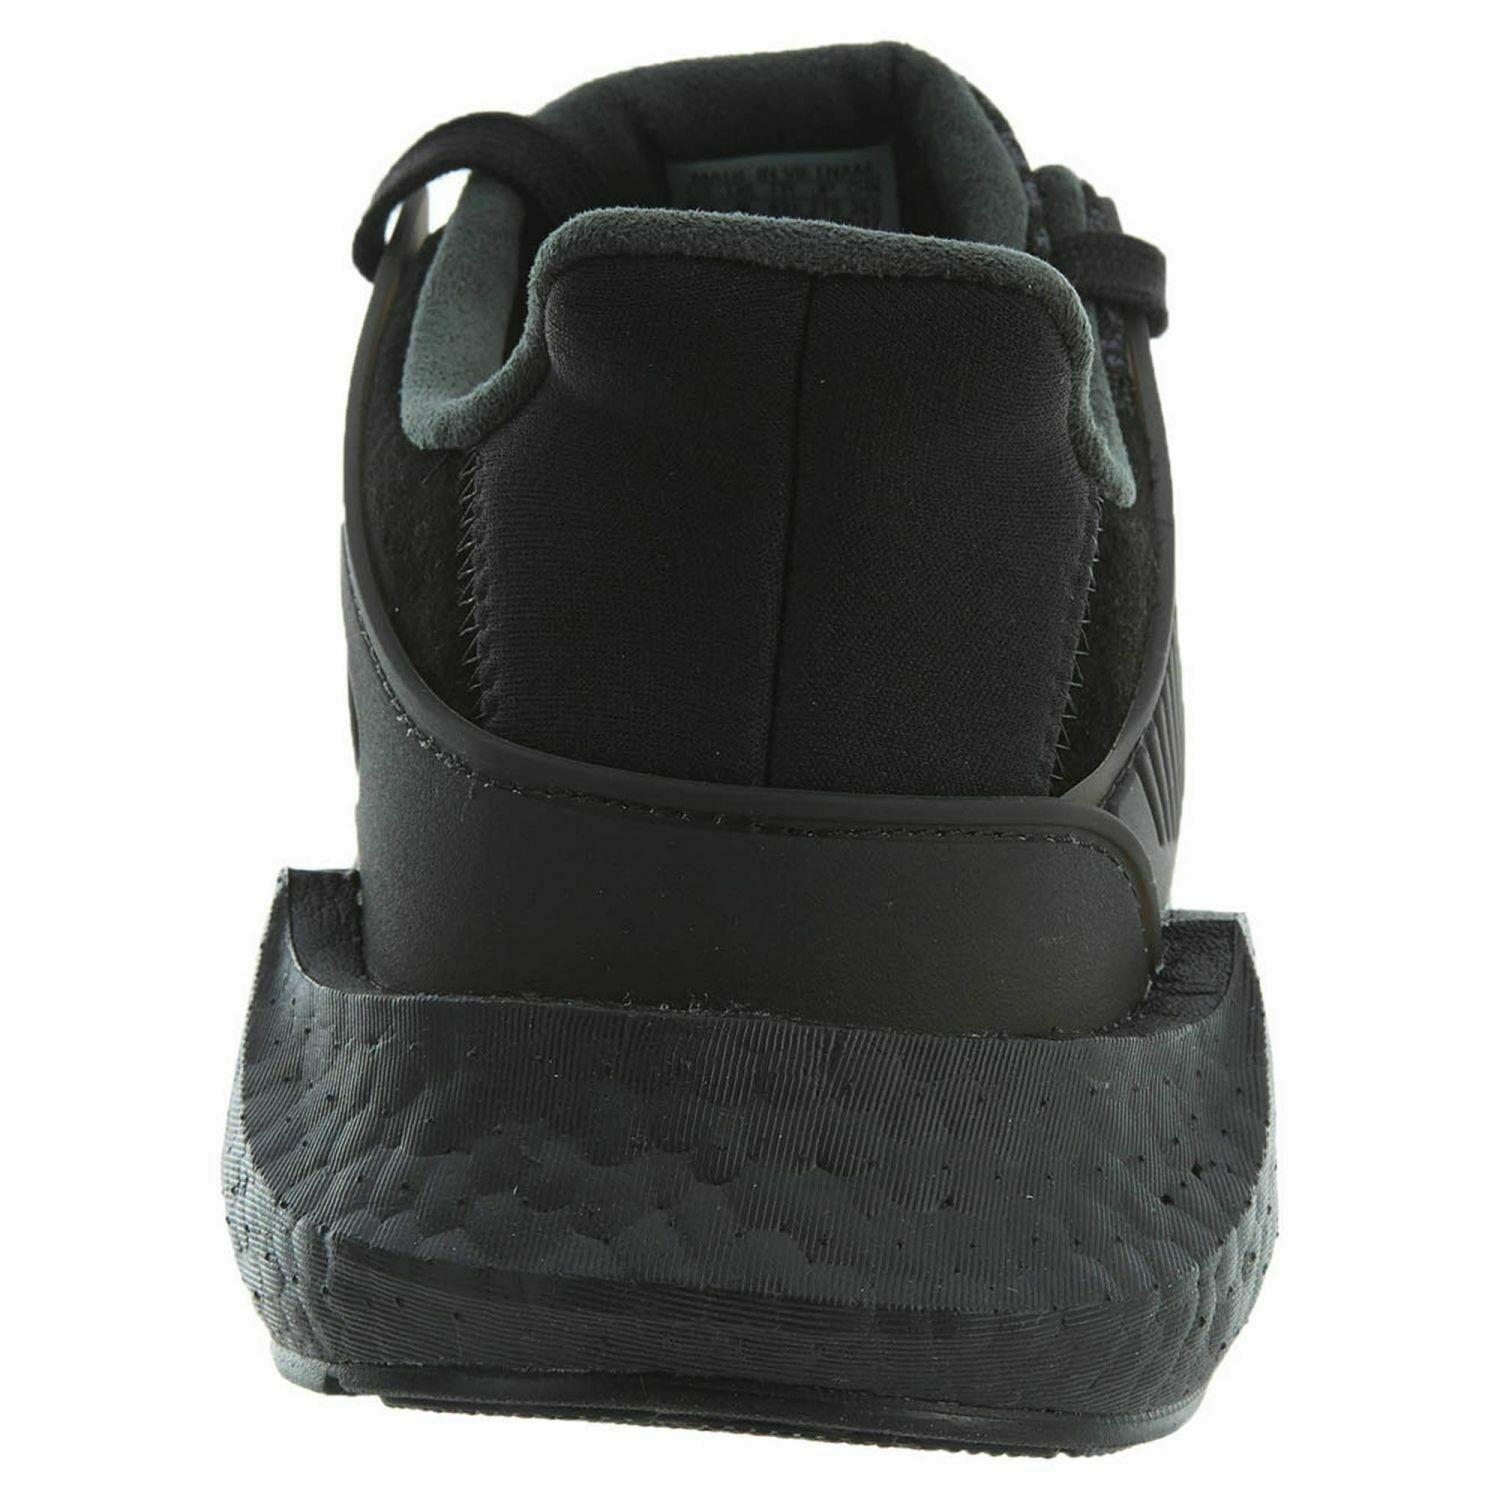 Adidas shoes EQT Support - Black/Black/White 1